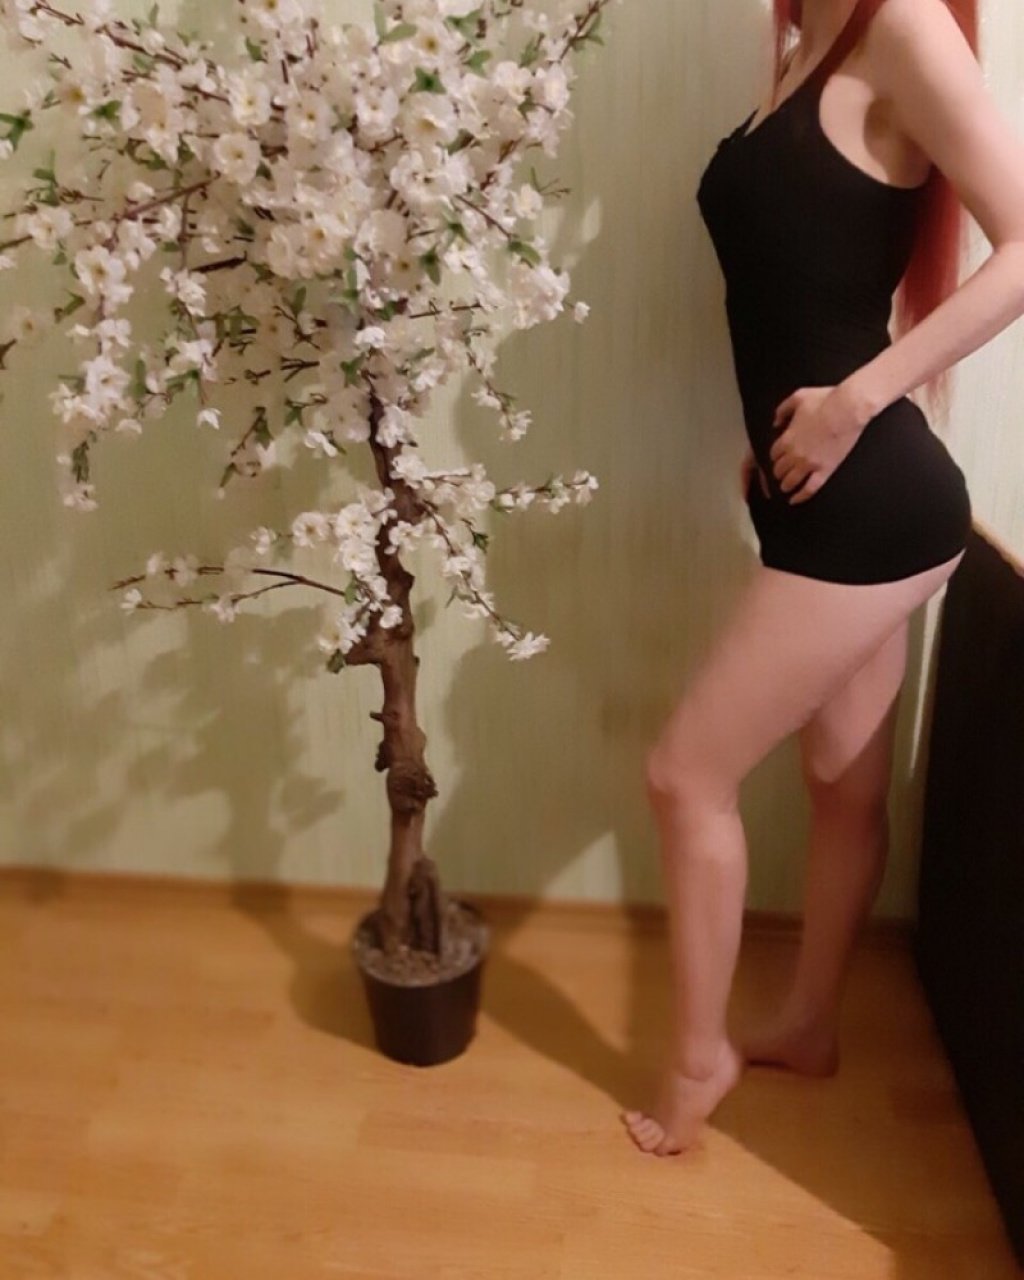 вика: Проститутка-индивидуалка в Белгороде